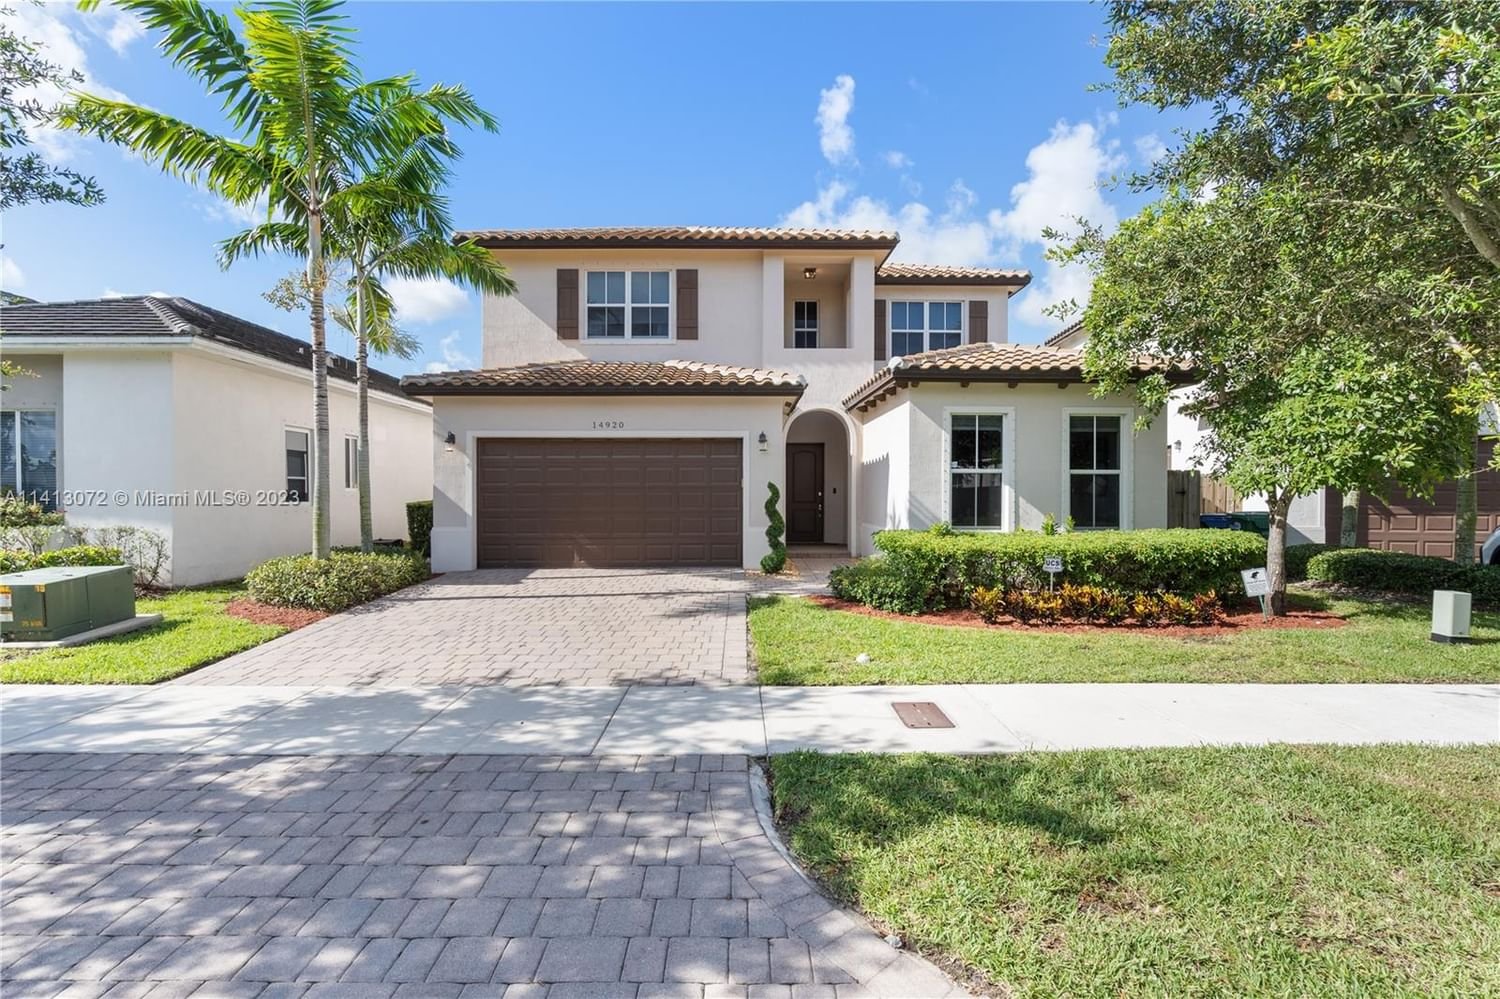 Real estate property located at 14920 176th Ter, Miami-Dade County, Miami, FL